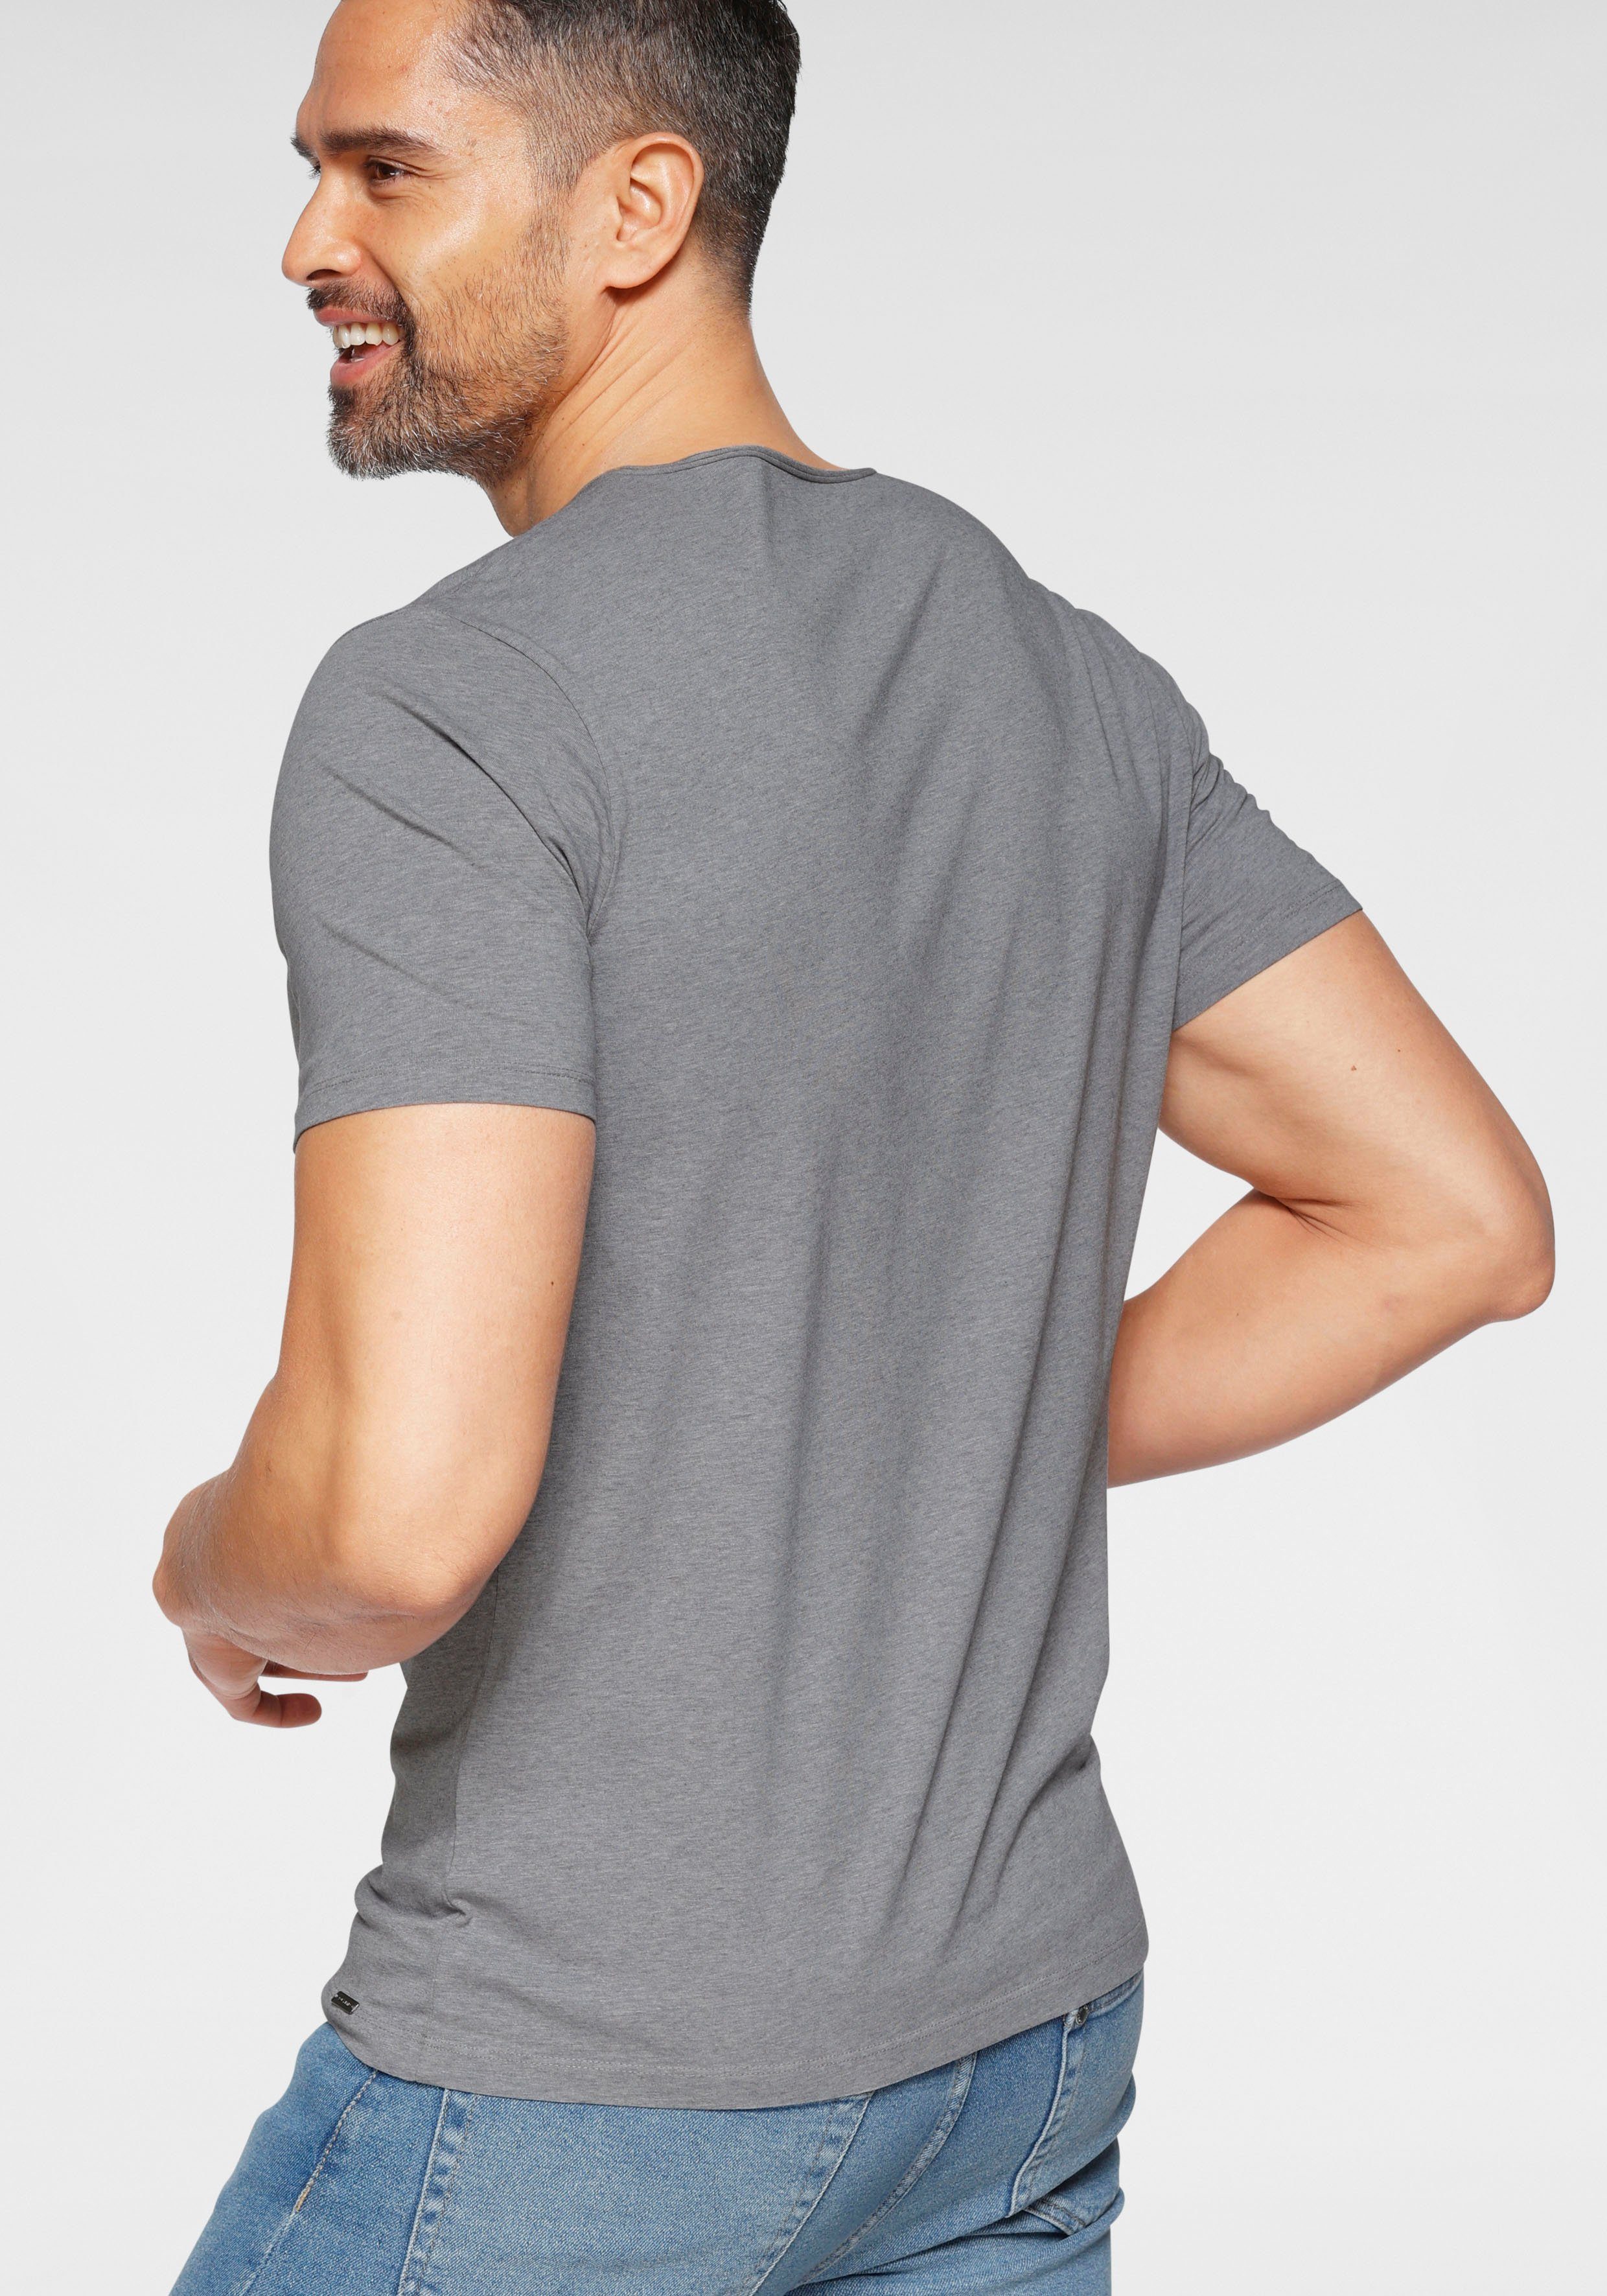 OLYMP T-Shirt Level Five Jersey aus silbergrau body fit feinem